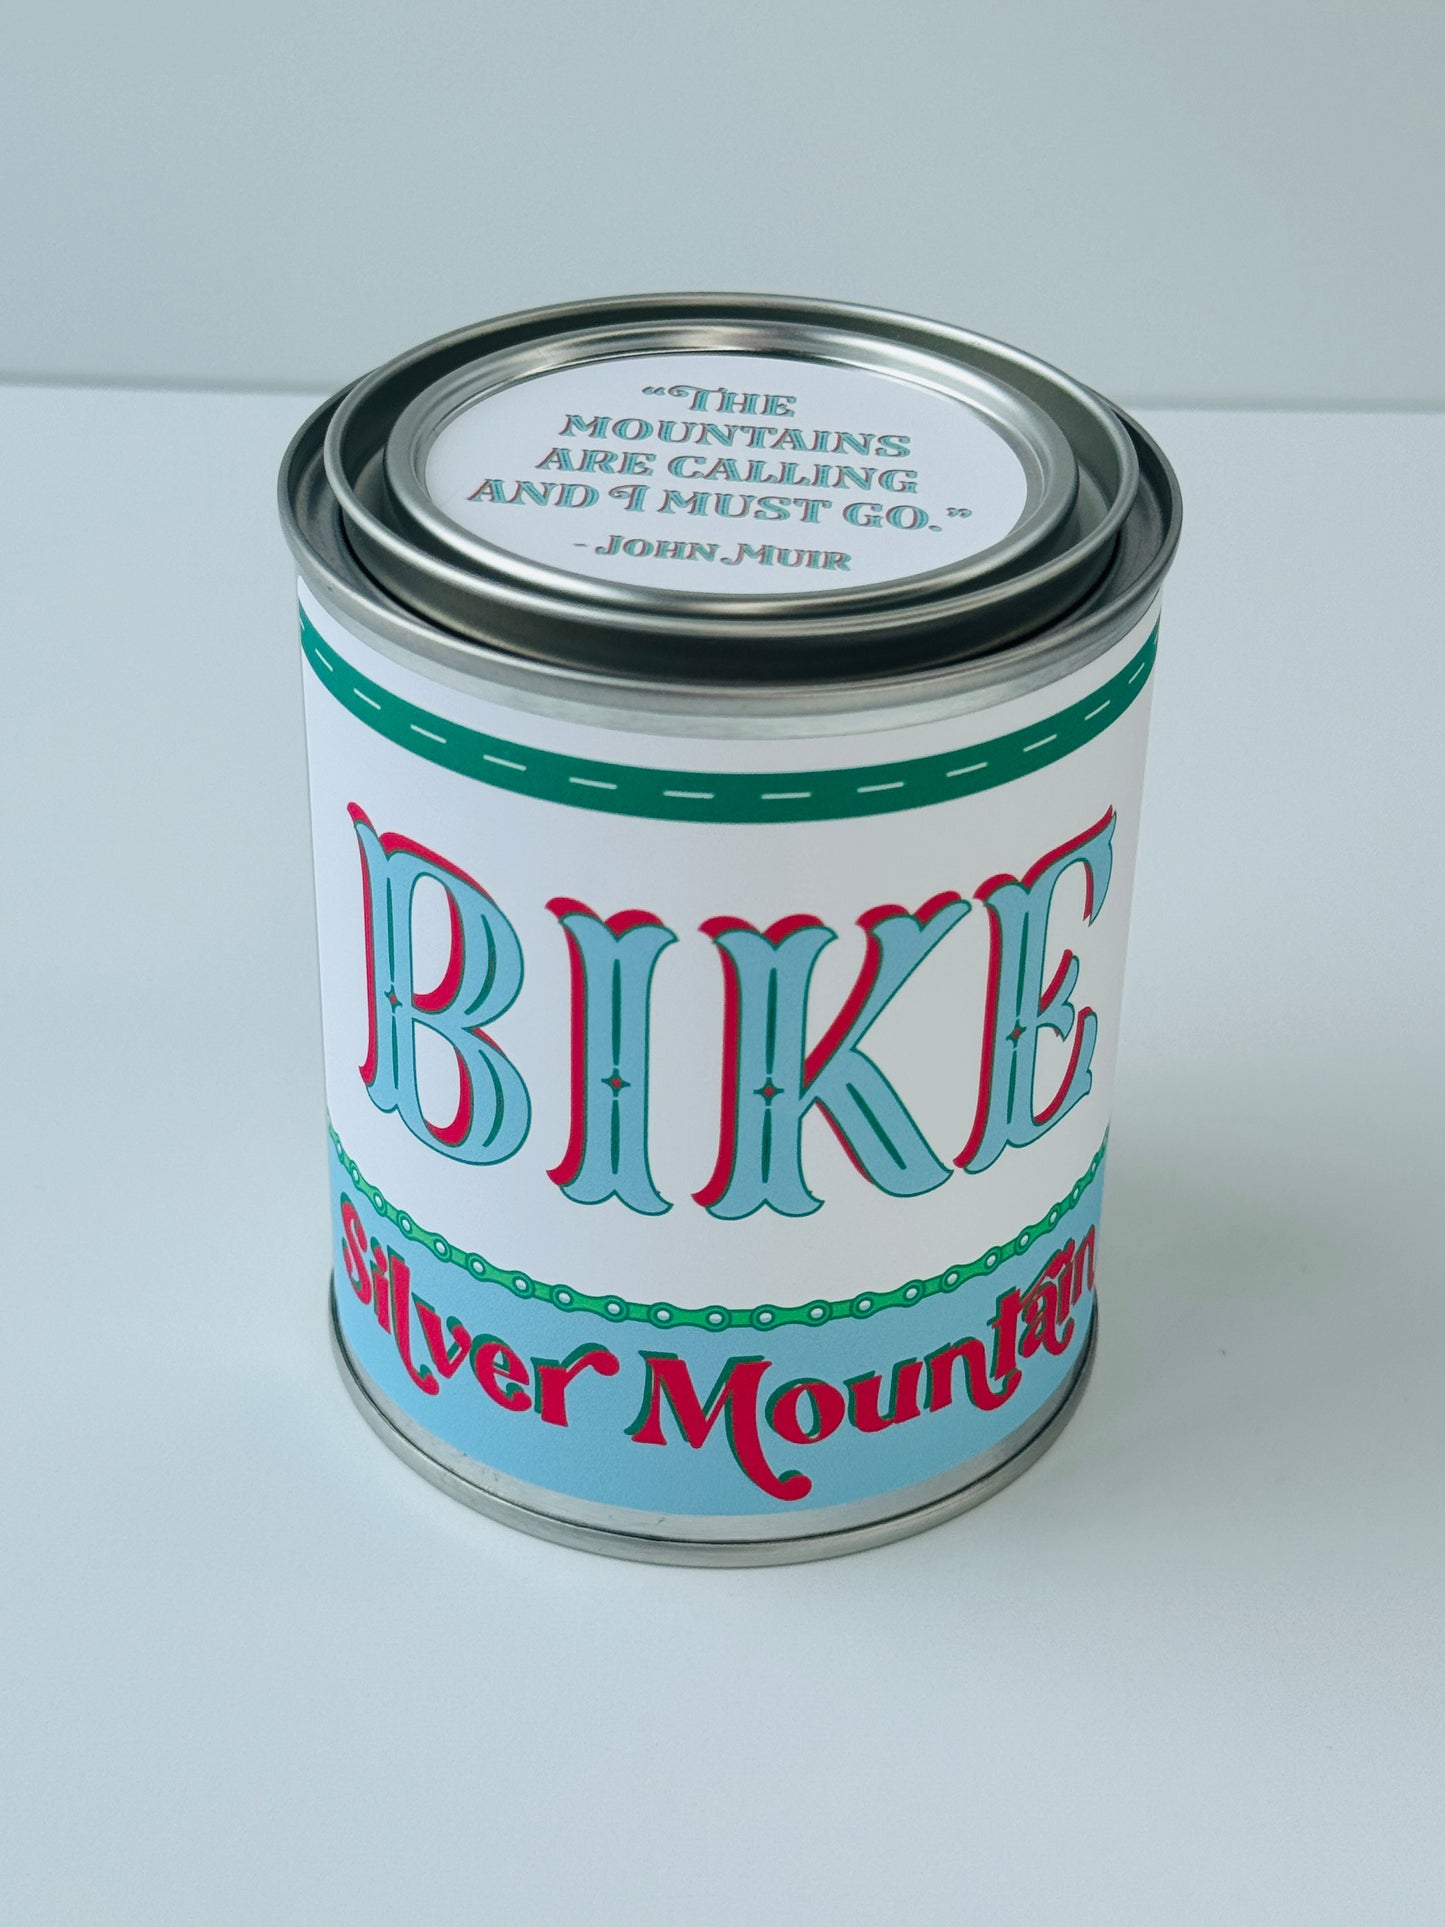 Bike Silver Mountain - Paint Tin Candle